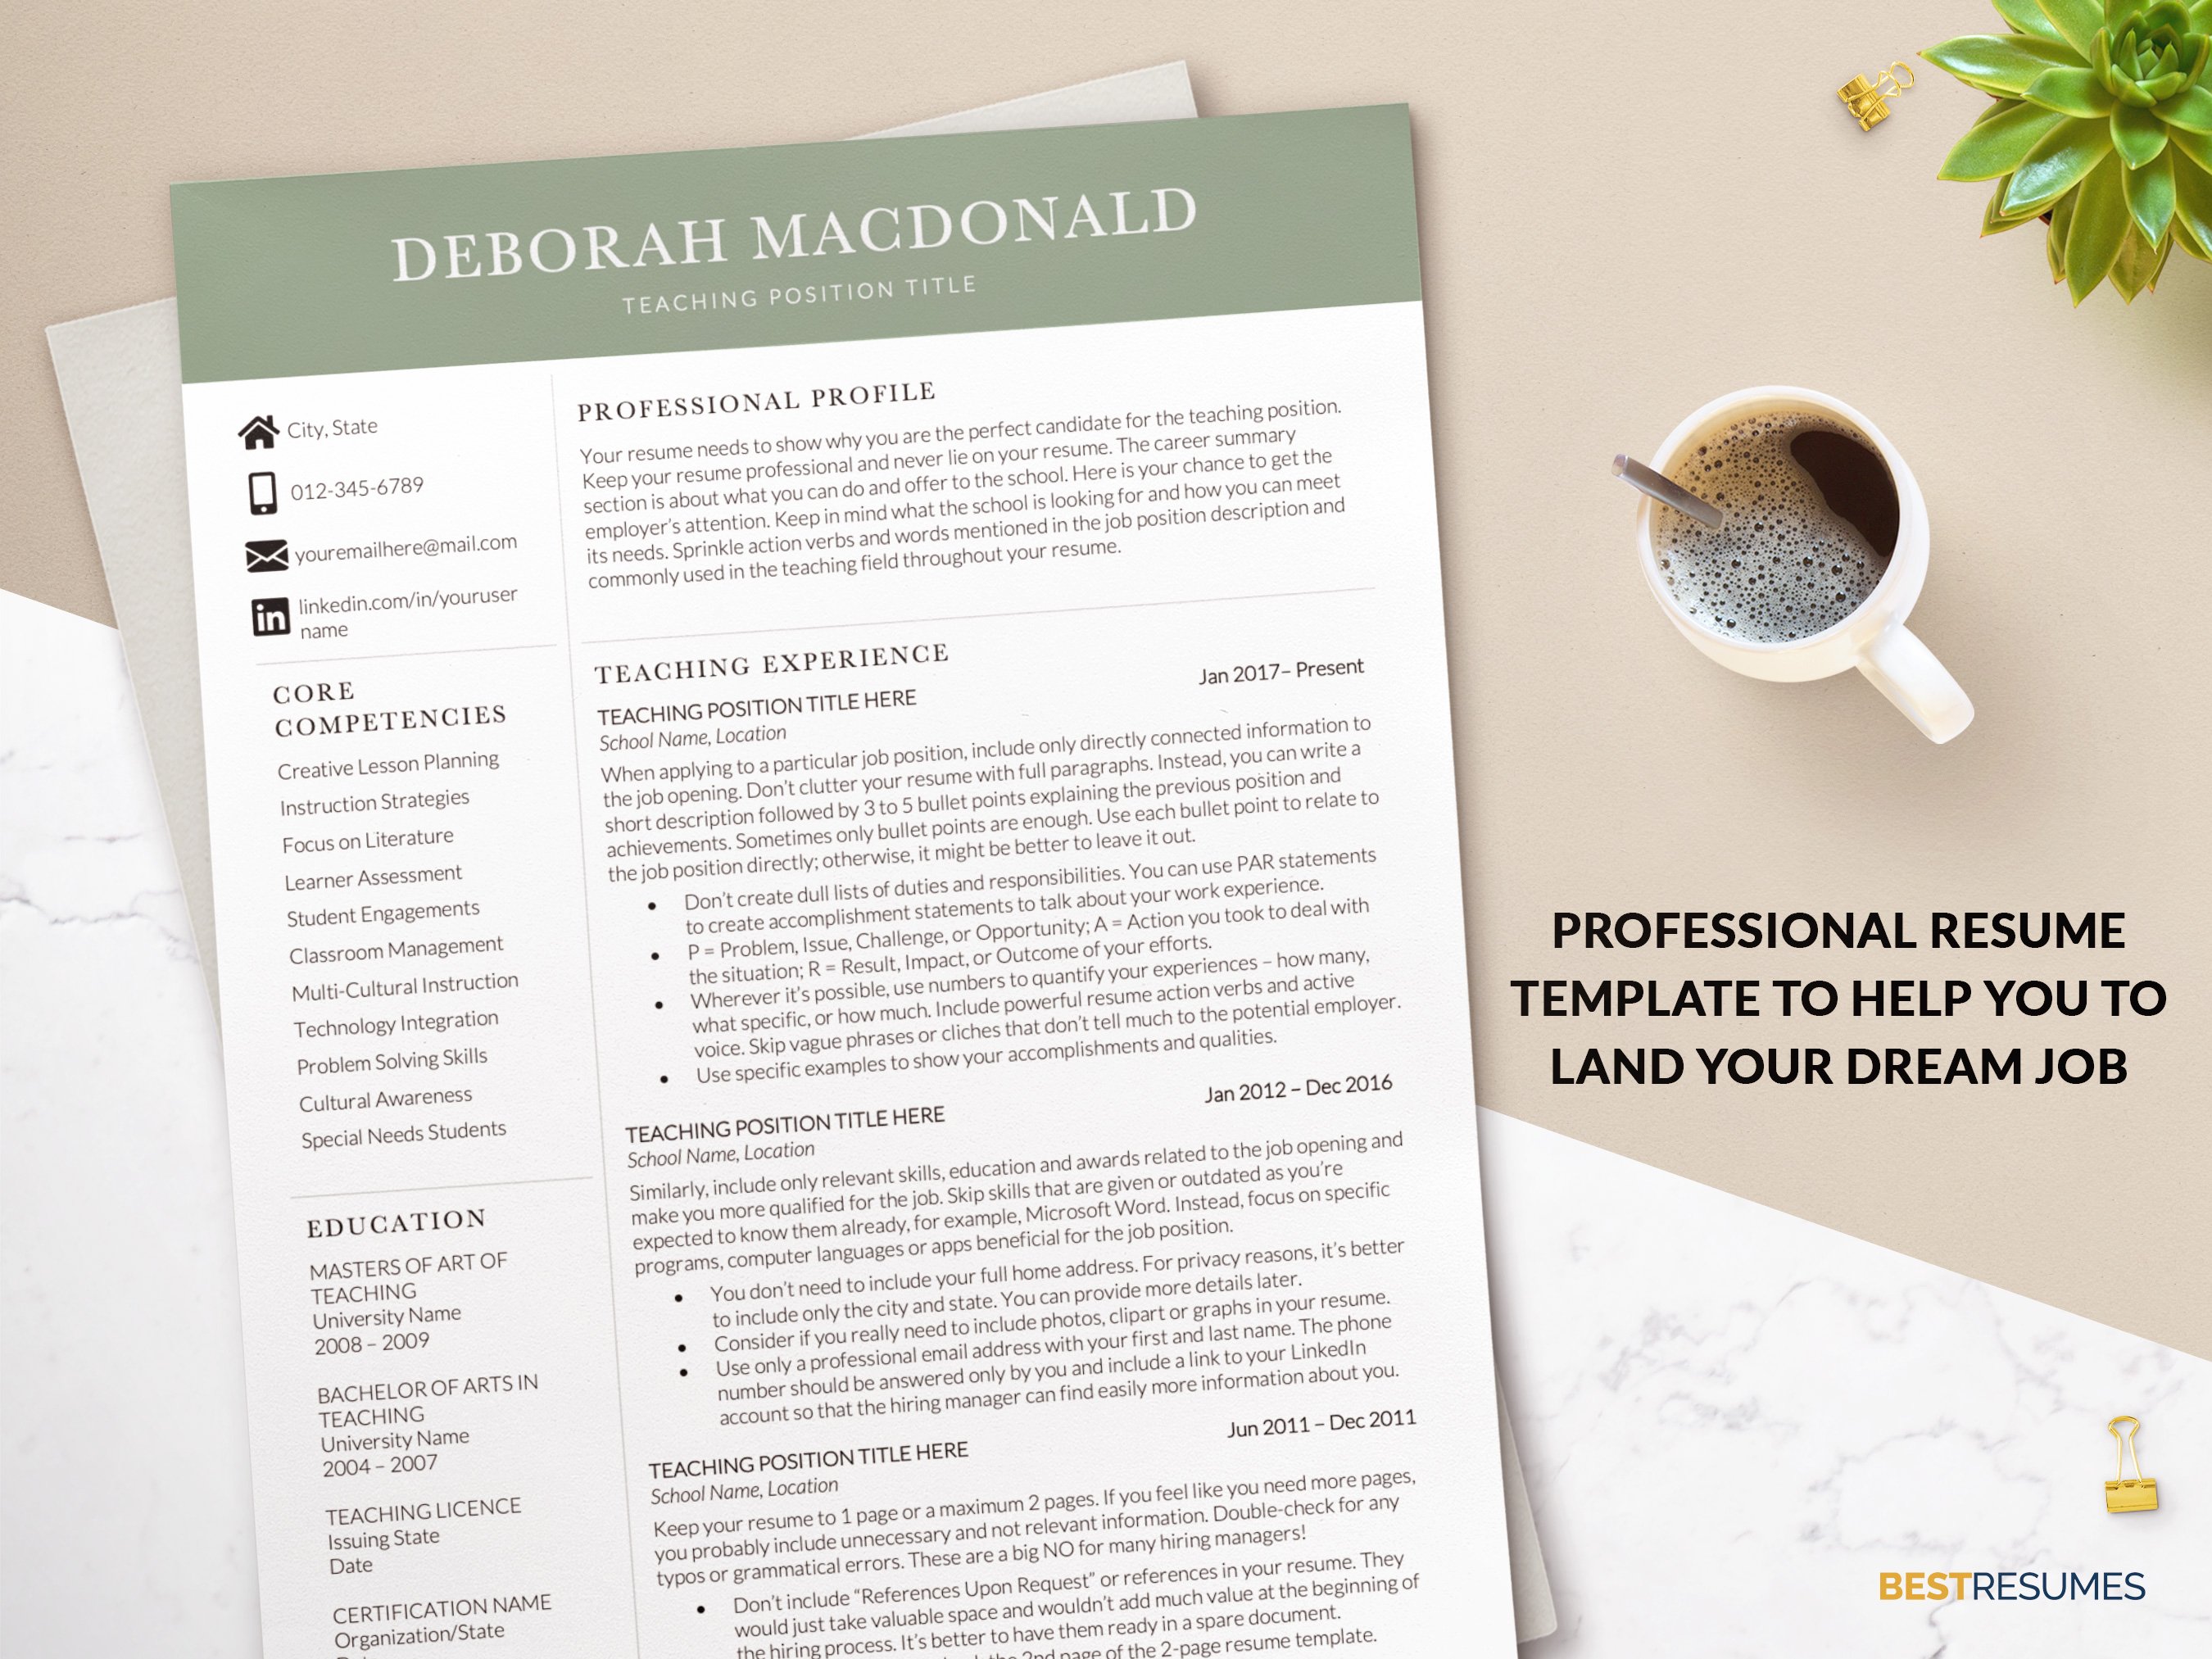 modern resume for teachers template professional resume template deborah macdonald 986